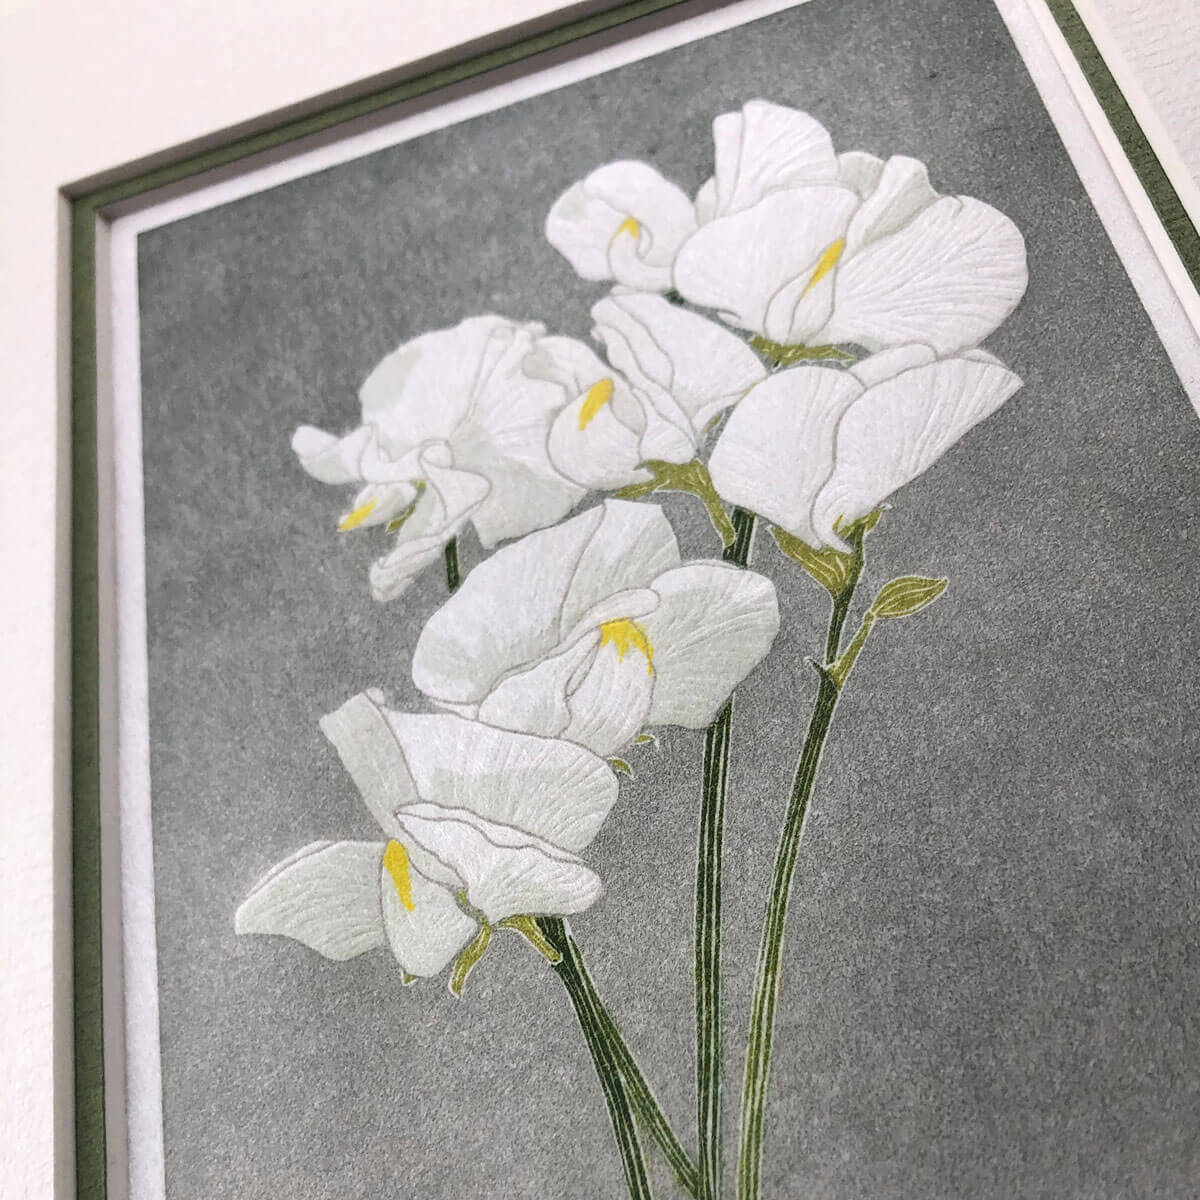 handmade print of white sweetpea flowers against graded grey background